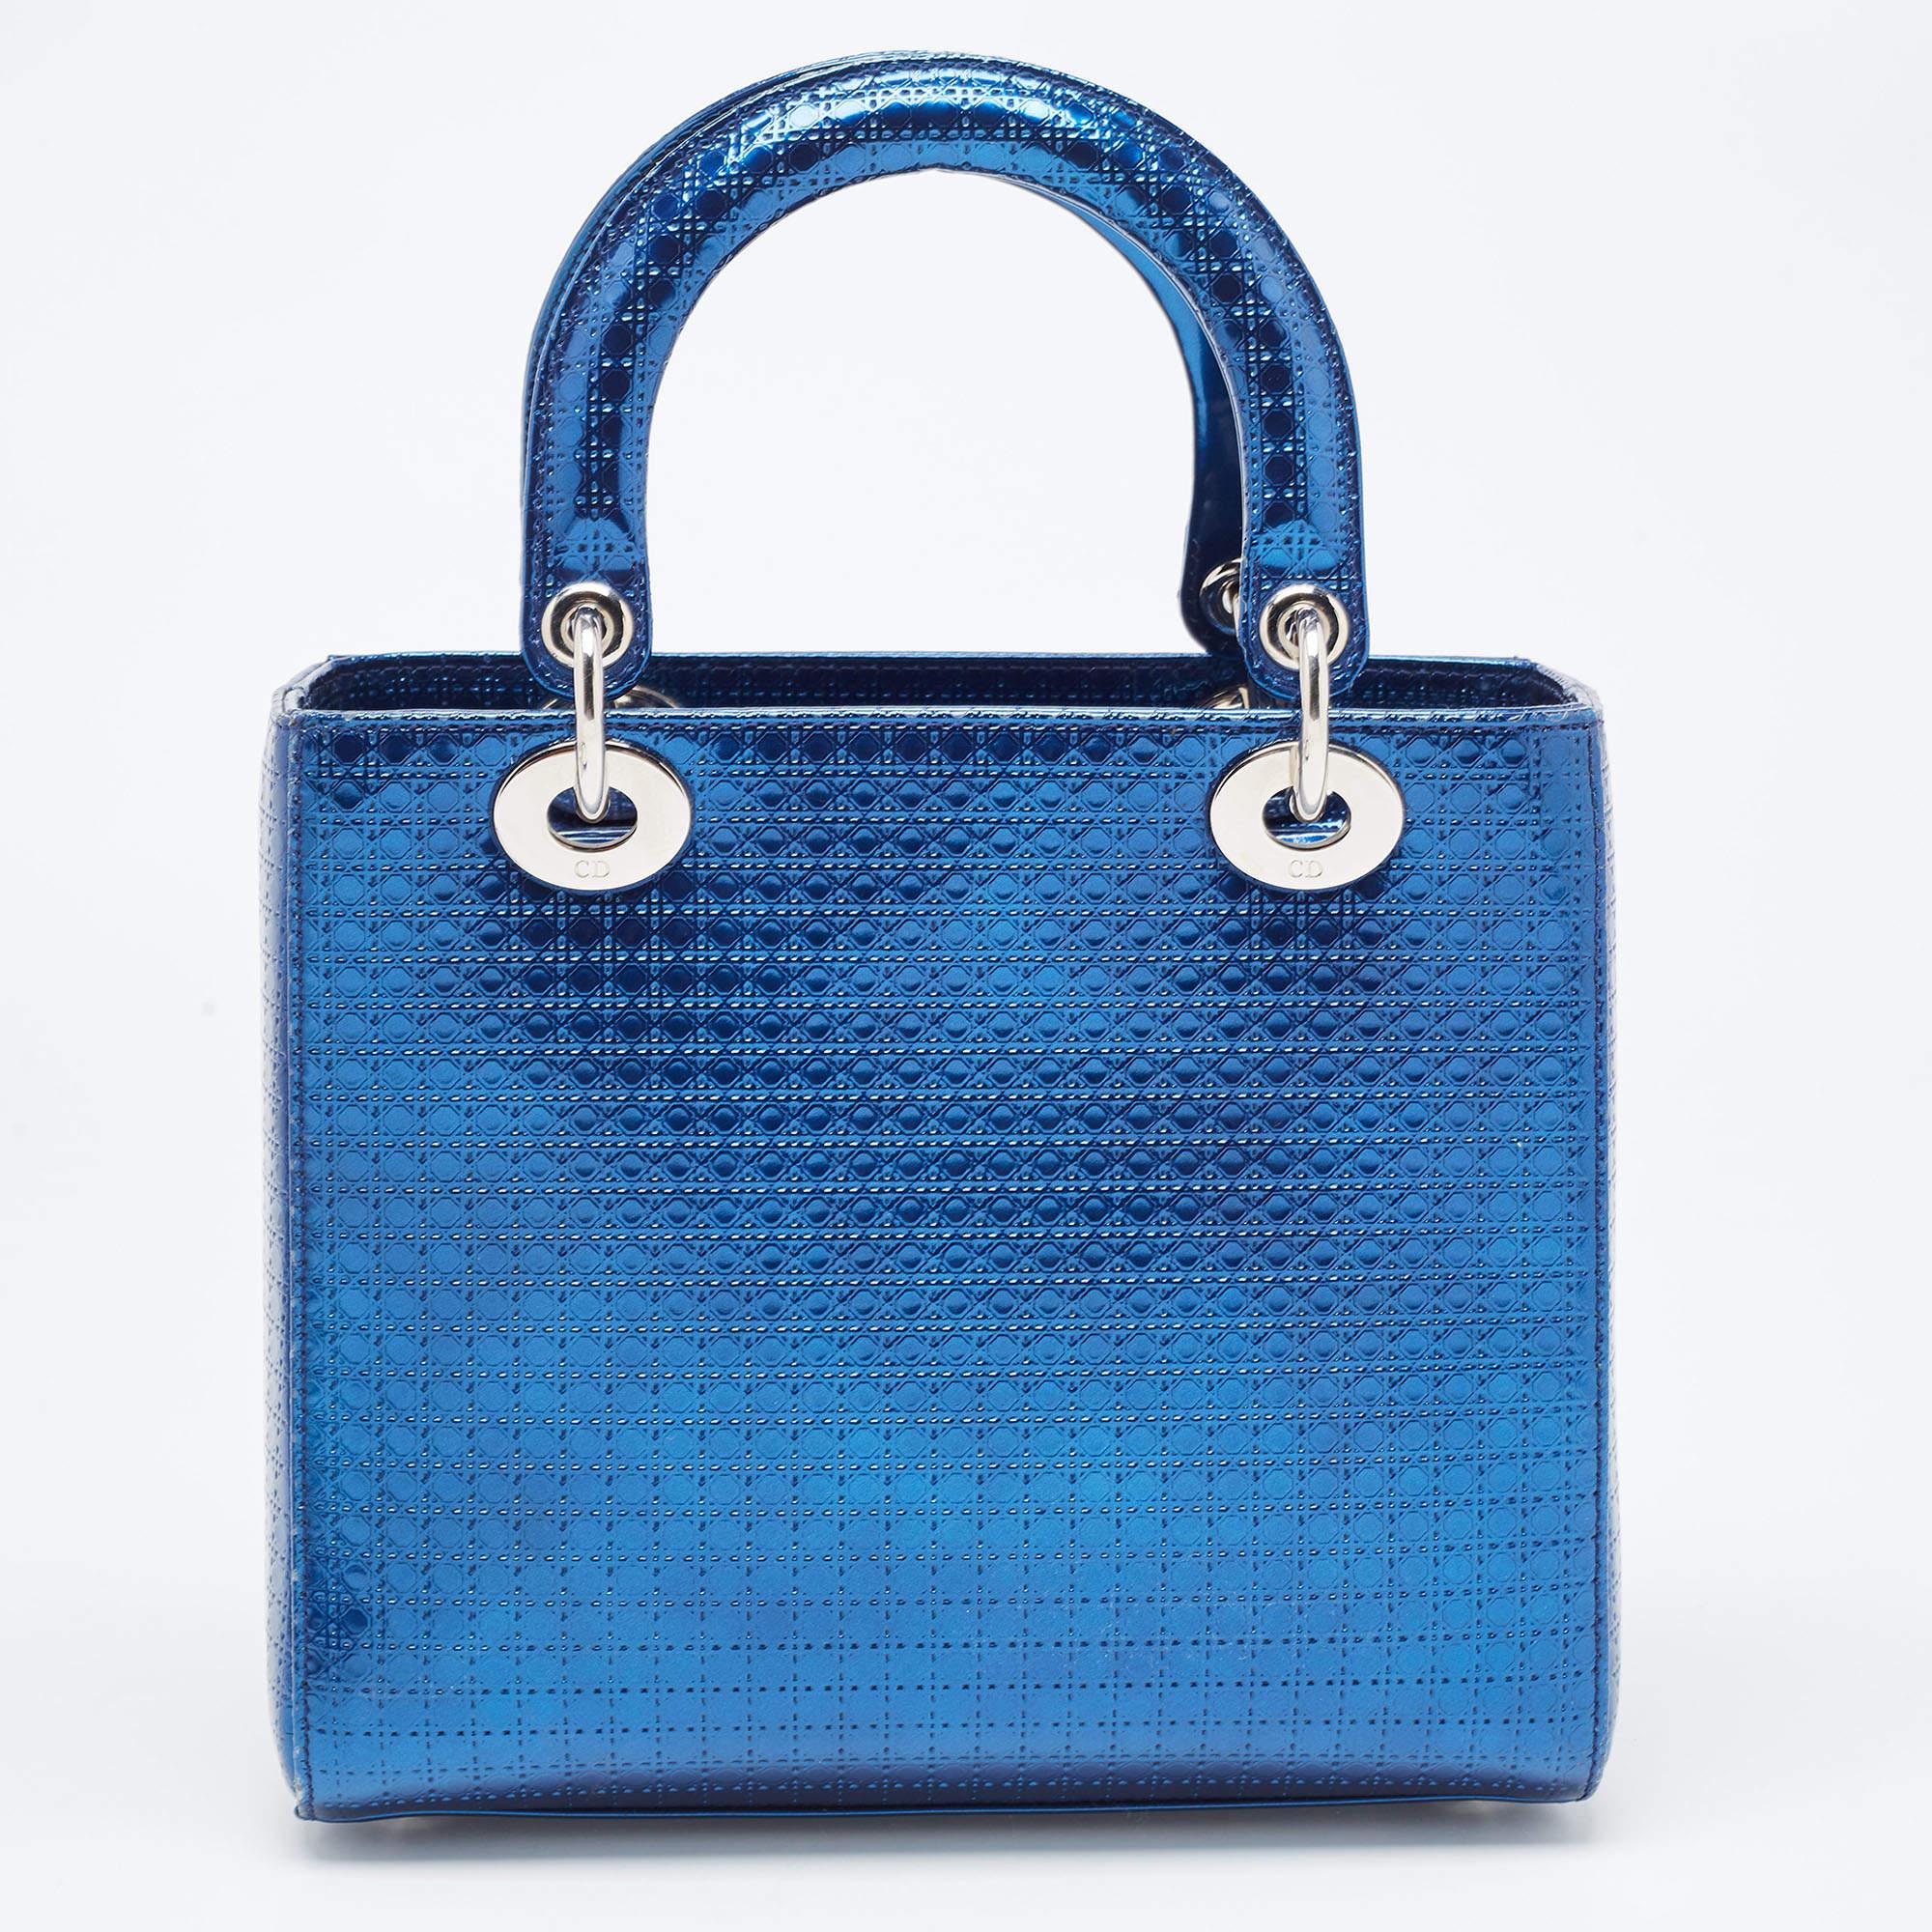 Dior Metallic Blue Microcannage Patent Leather Medium Lady Dior Tote 13